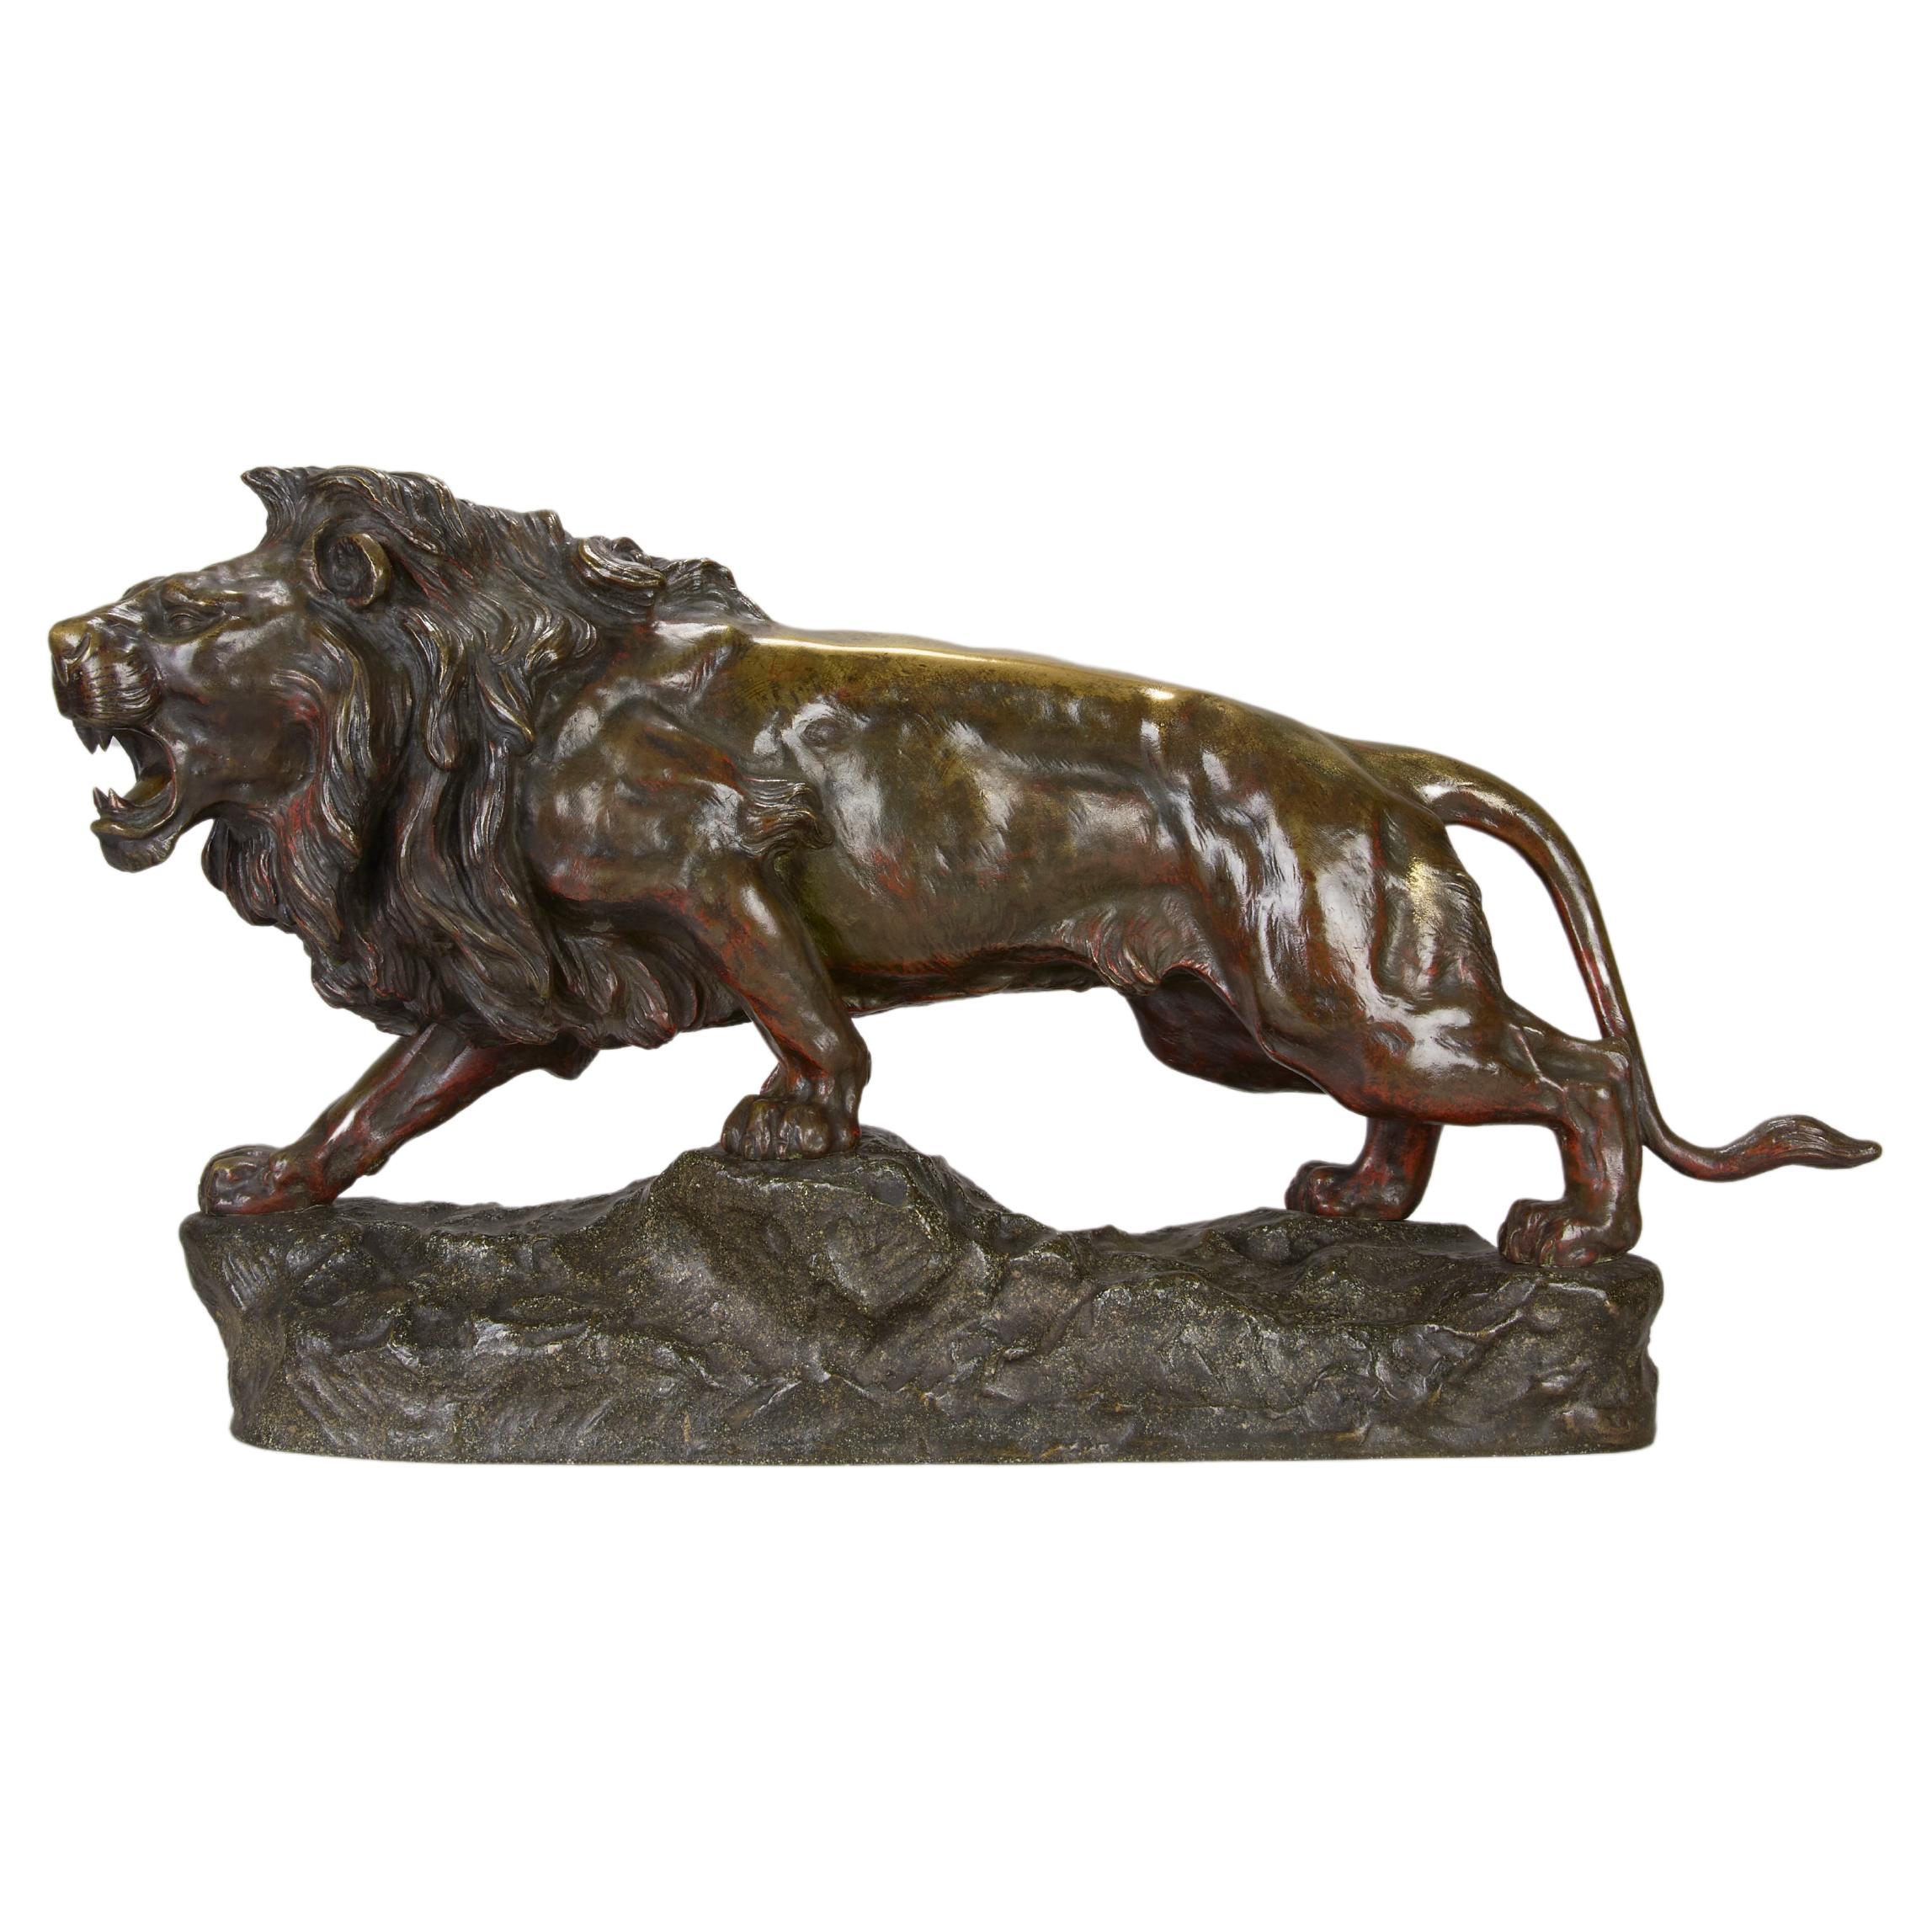 Early 20th Century Bronze Sculpture Entitled "Lion qui Marche" by J Descomps For Sale